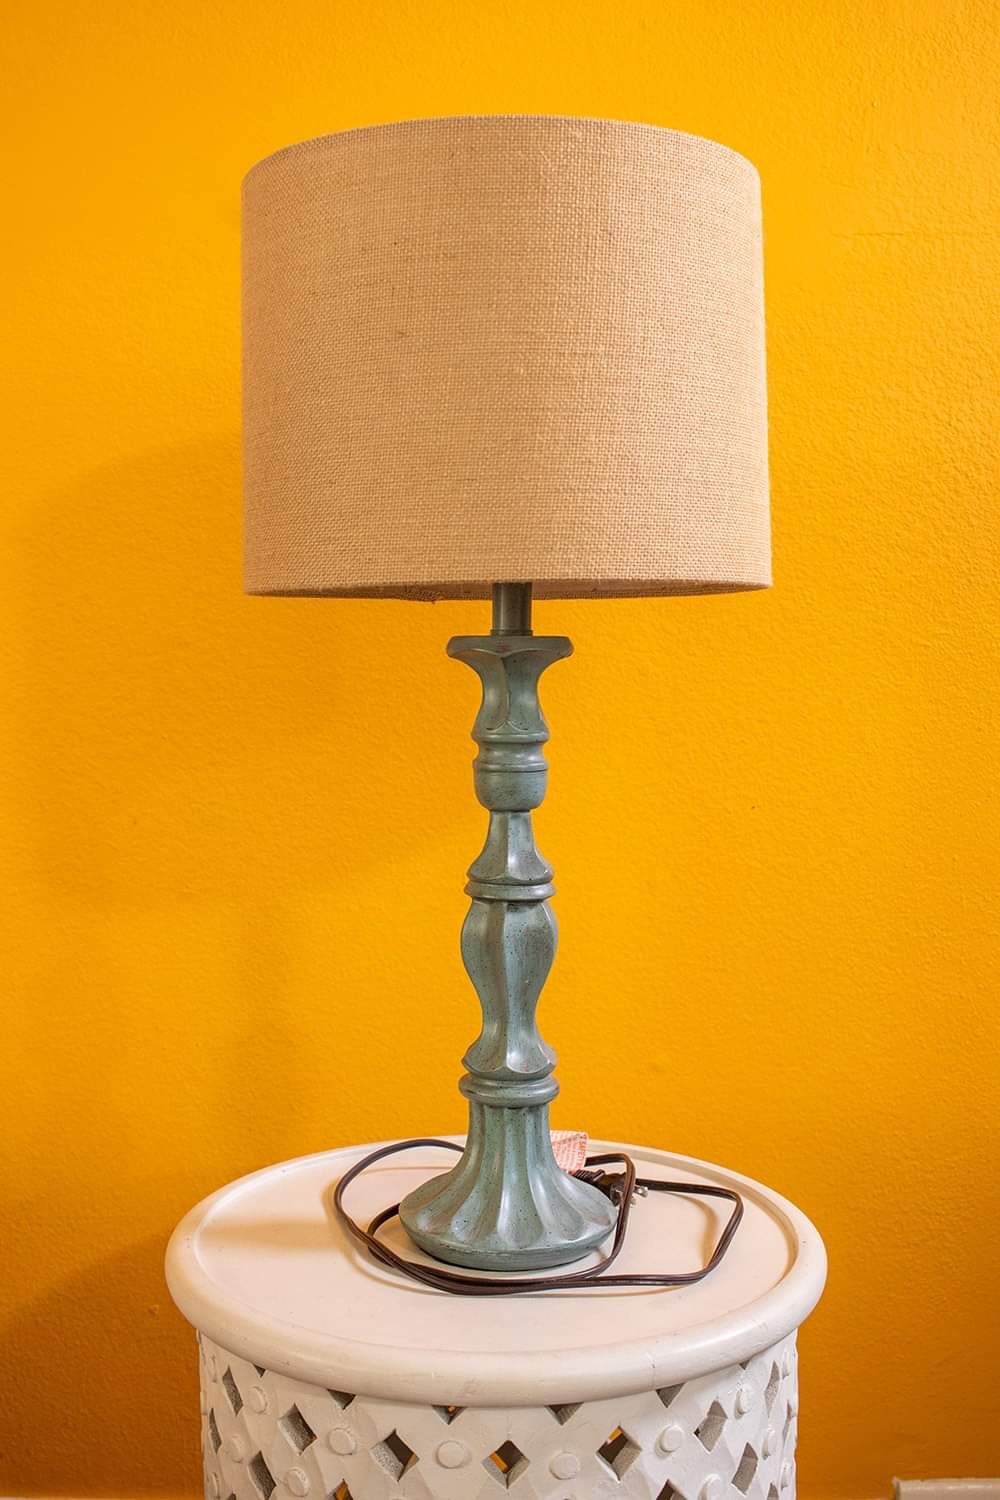 Table Lamp Rustic Teal / Green / Beige / Tan Color Wood